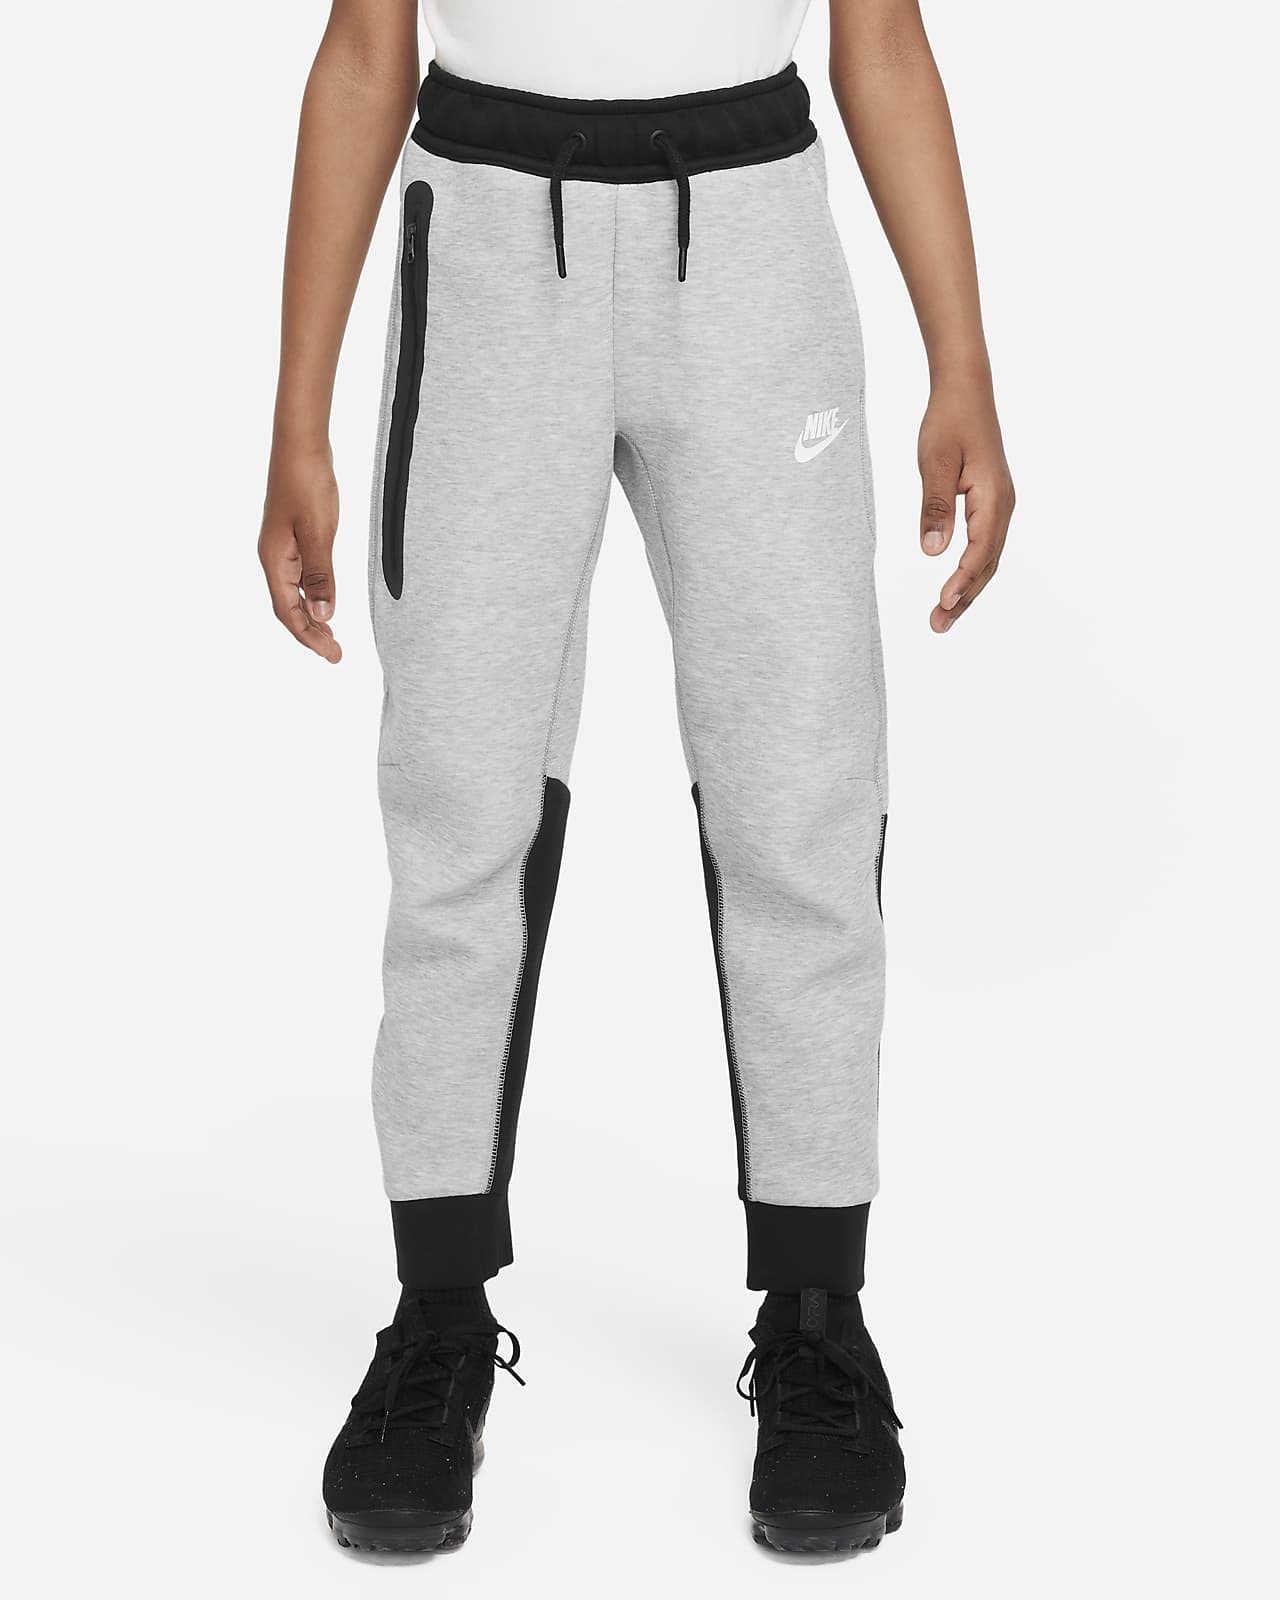 Calças Nike Sportswear Tech Fleece Júnior (Rapaz)